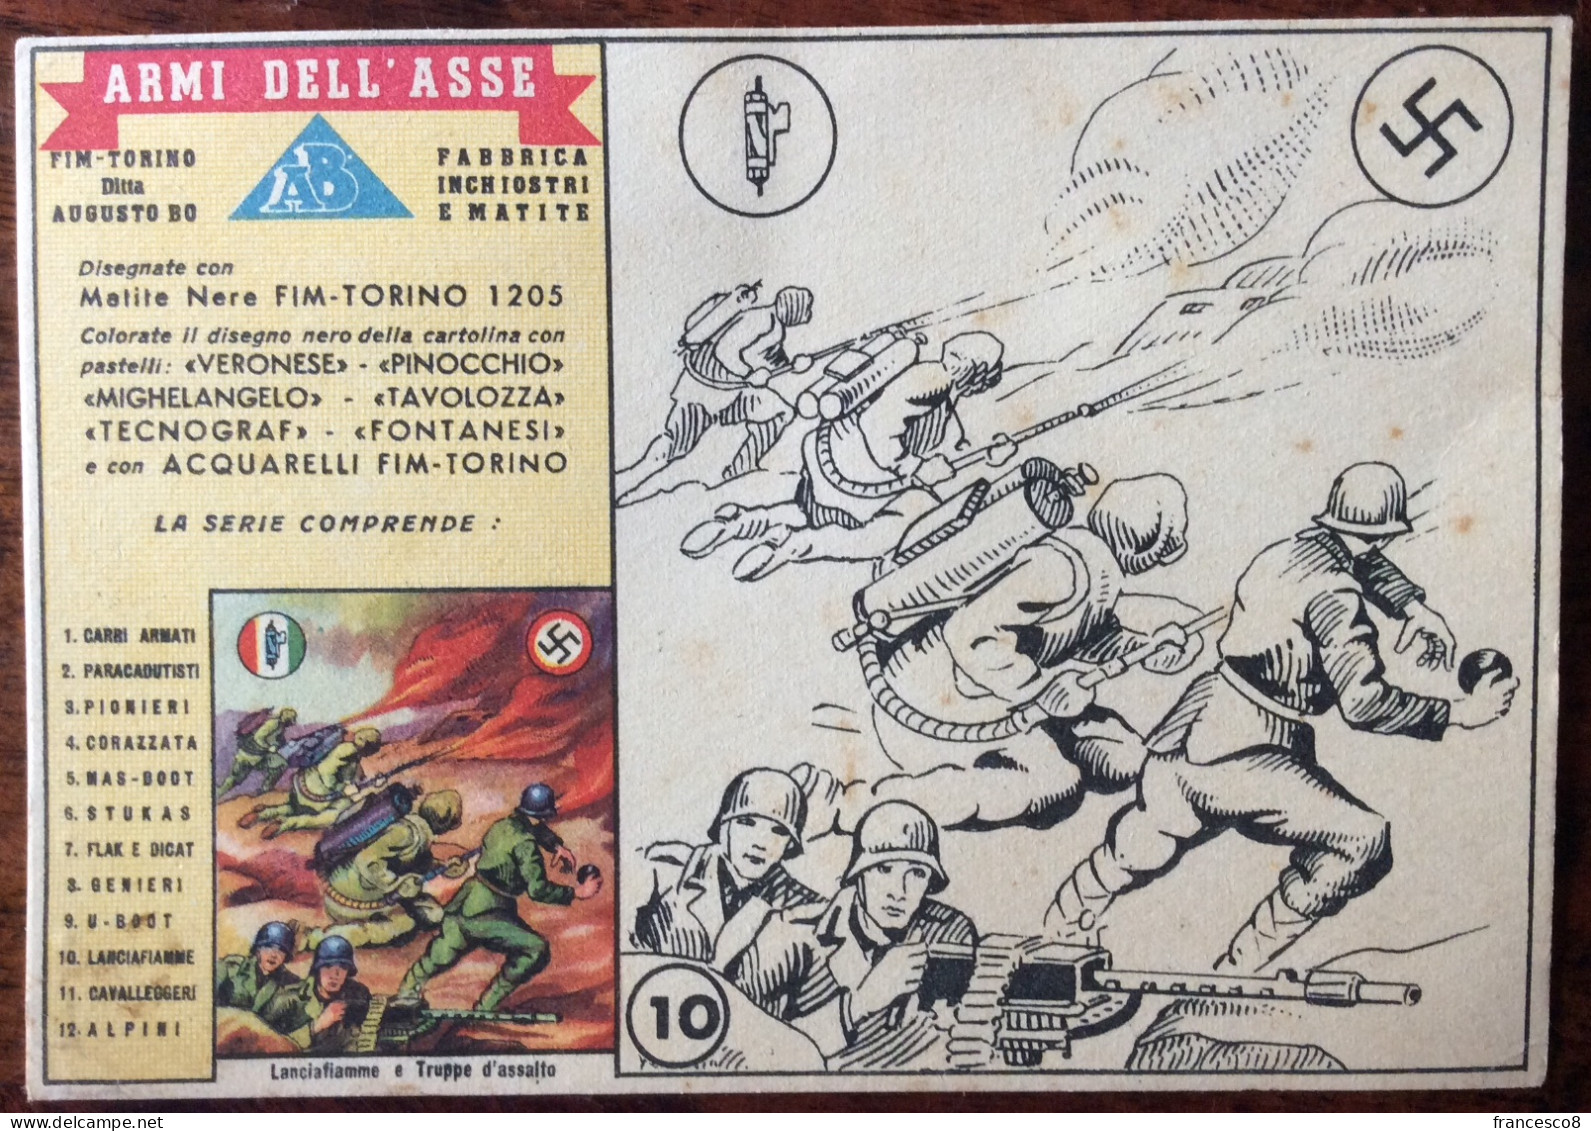 ARMI DELL'ASSE LANCIAFIAMME E TRUPPE D'ASSALTO / Fascismo - Guerra 1939-45